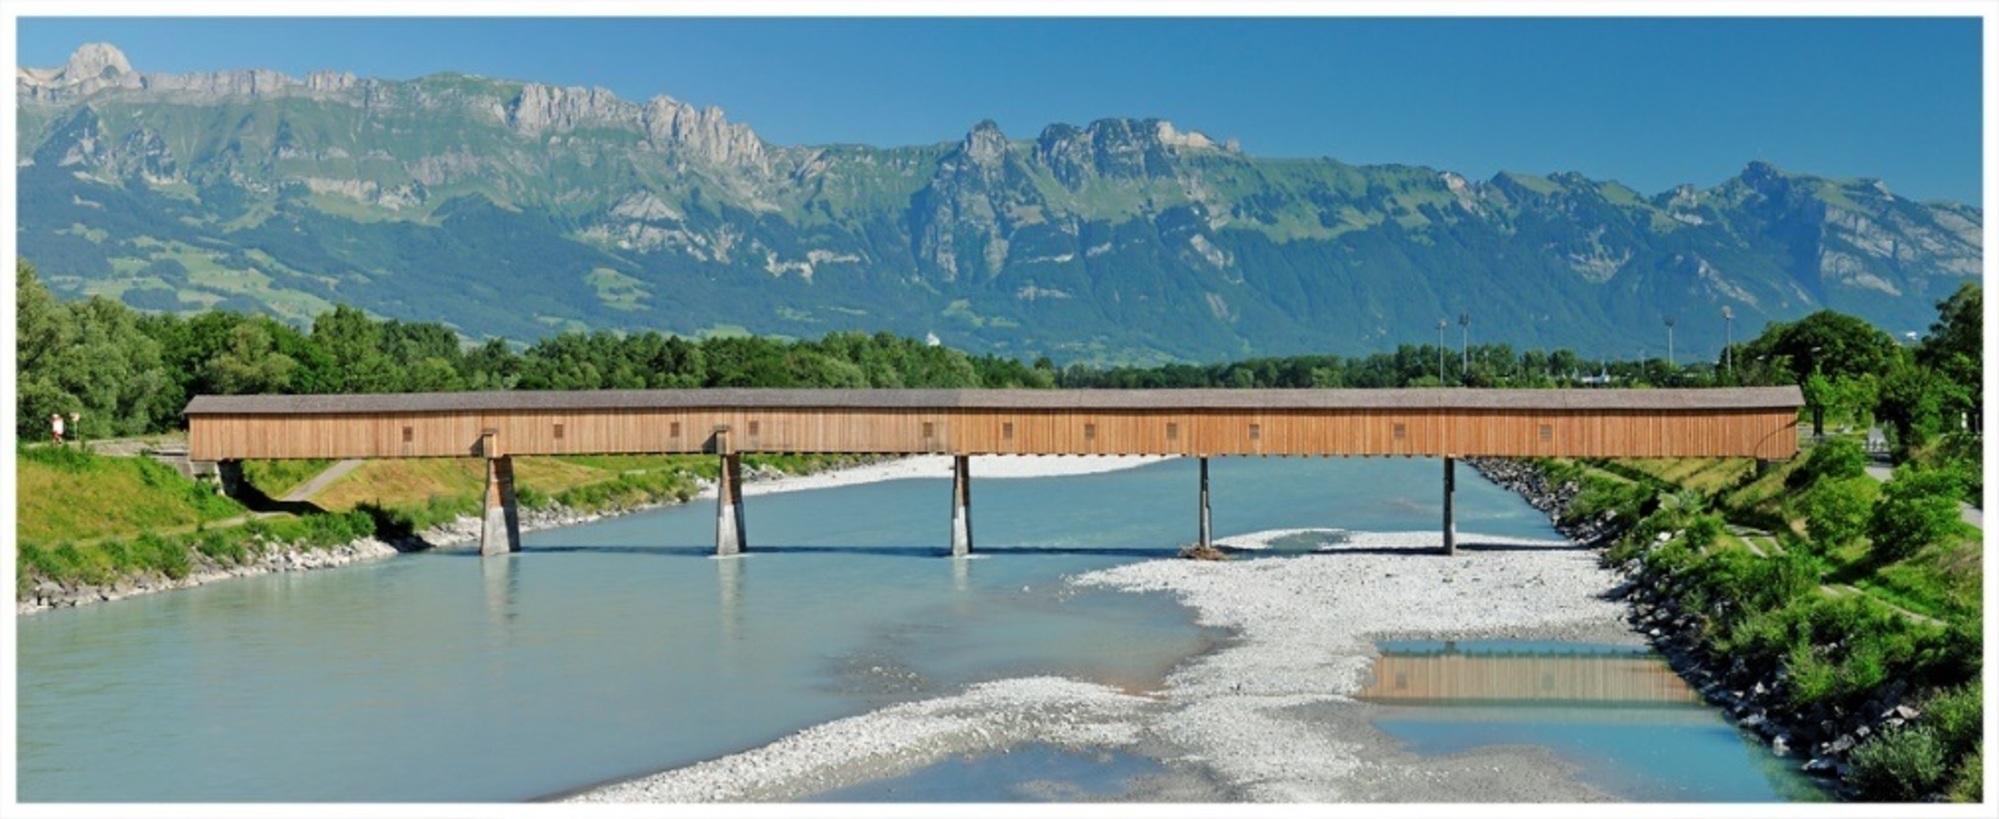 Slika 3 Pokrit most Sevelen-Vaduz. Foto: Peter Schädler.